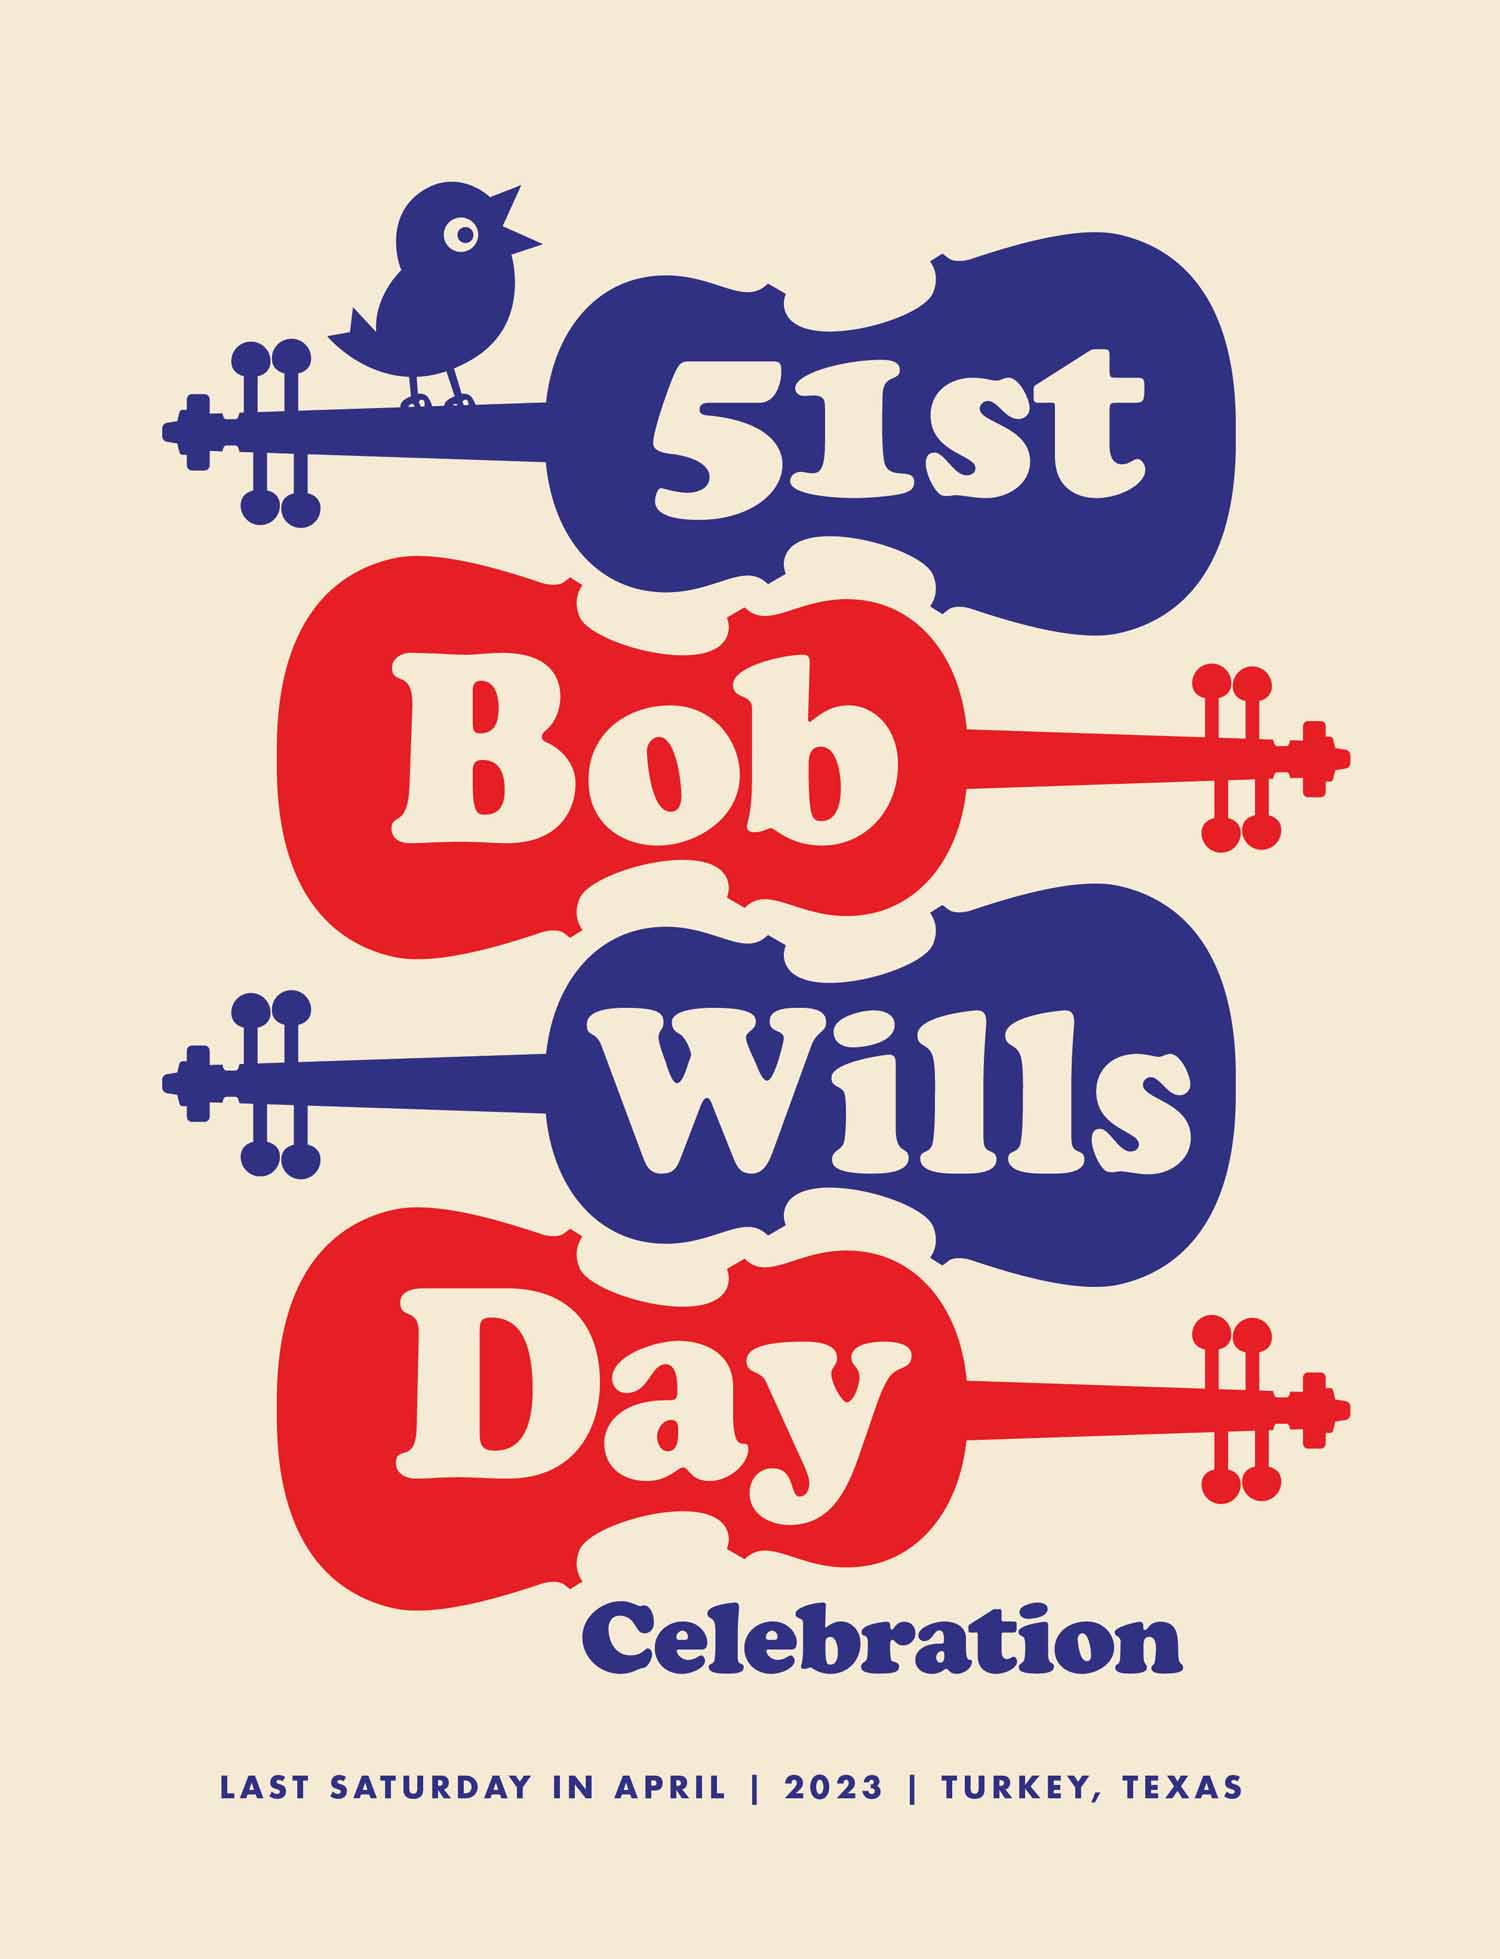 51st Bob Willis Days